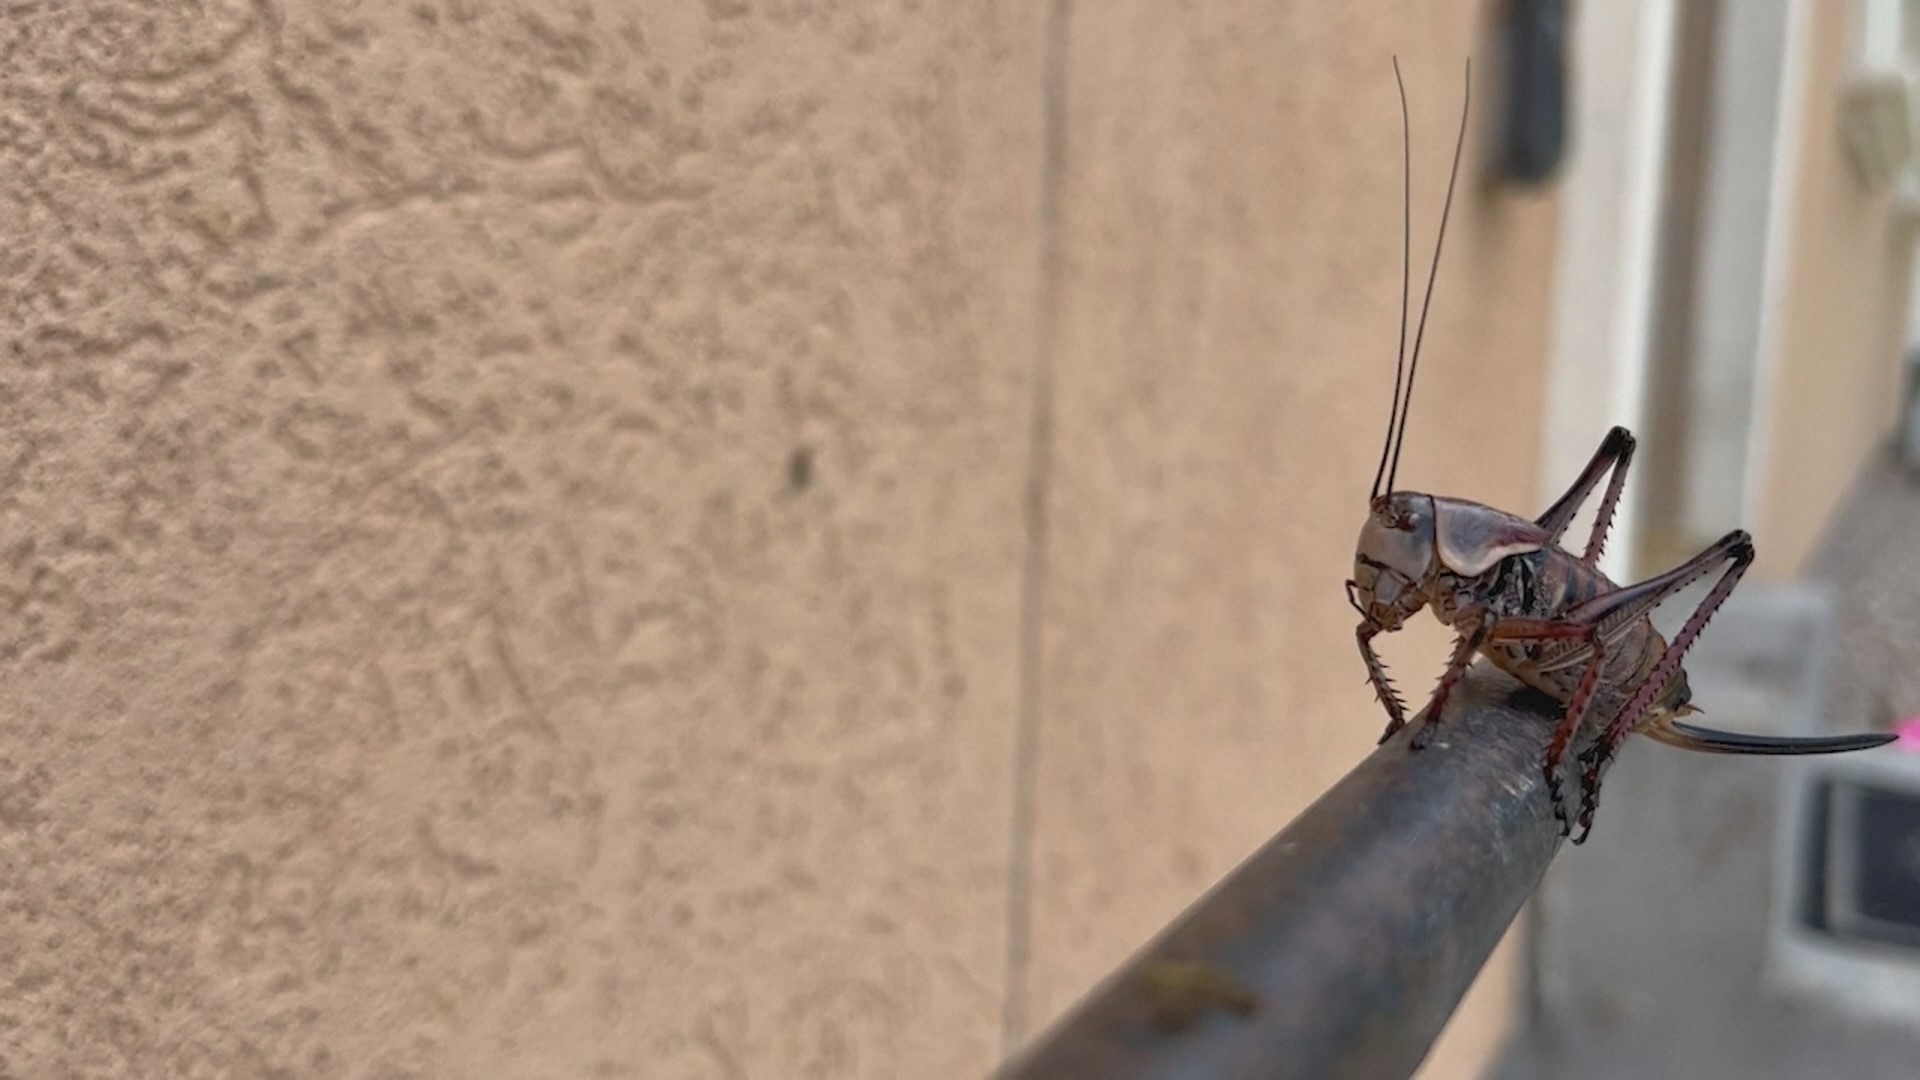 Crickets invade Elko, Nevada